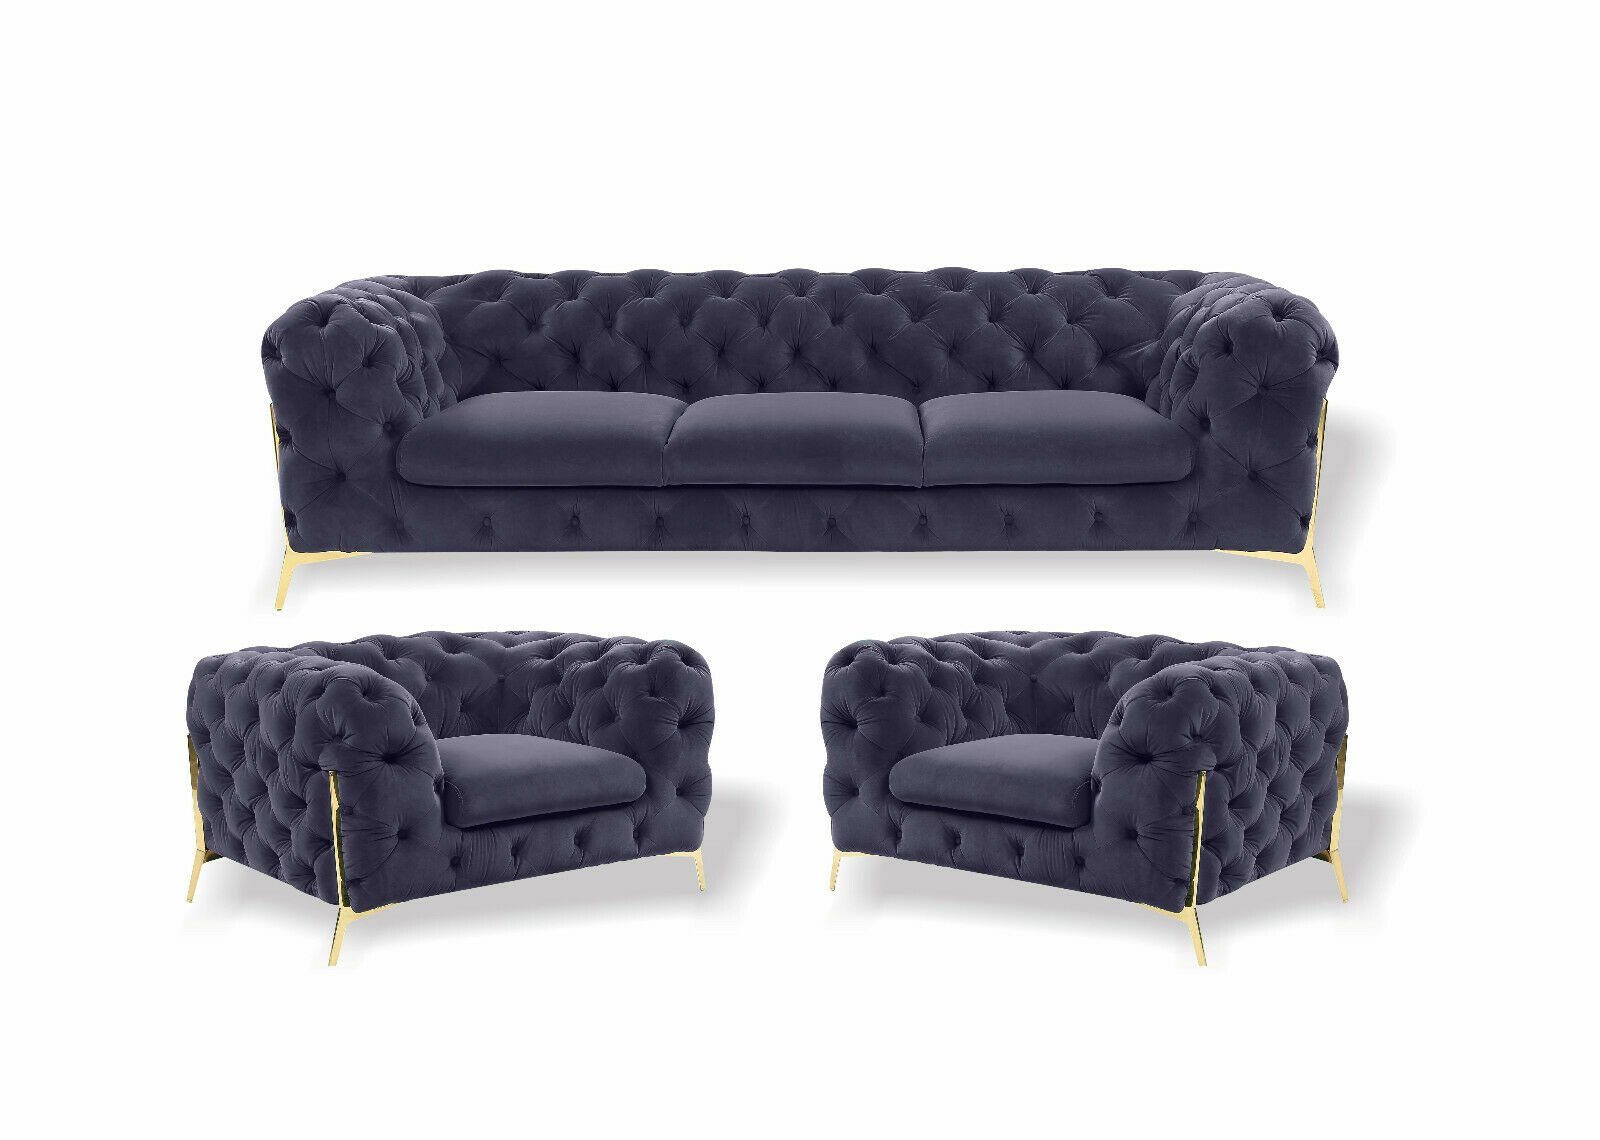 Super willkommen diesen Monat JVmoebel Sofa, Chesterfield luxus 3+1+1 Dunkelviolett Sofa-Set